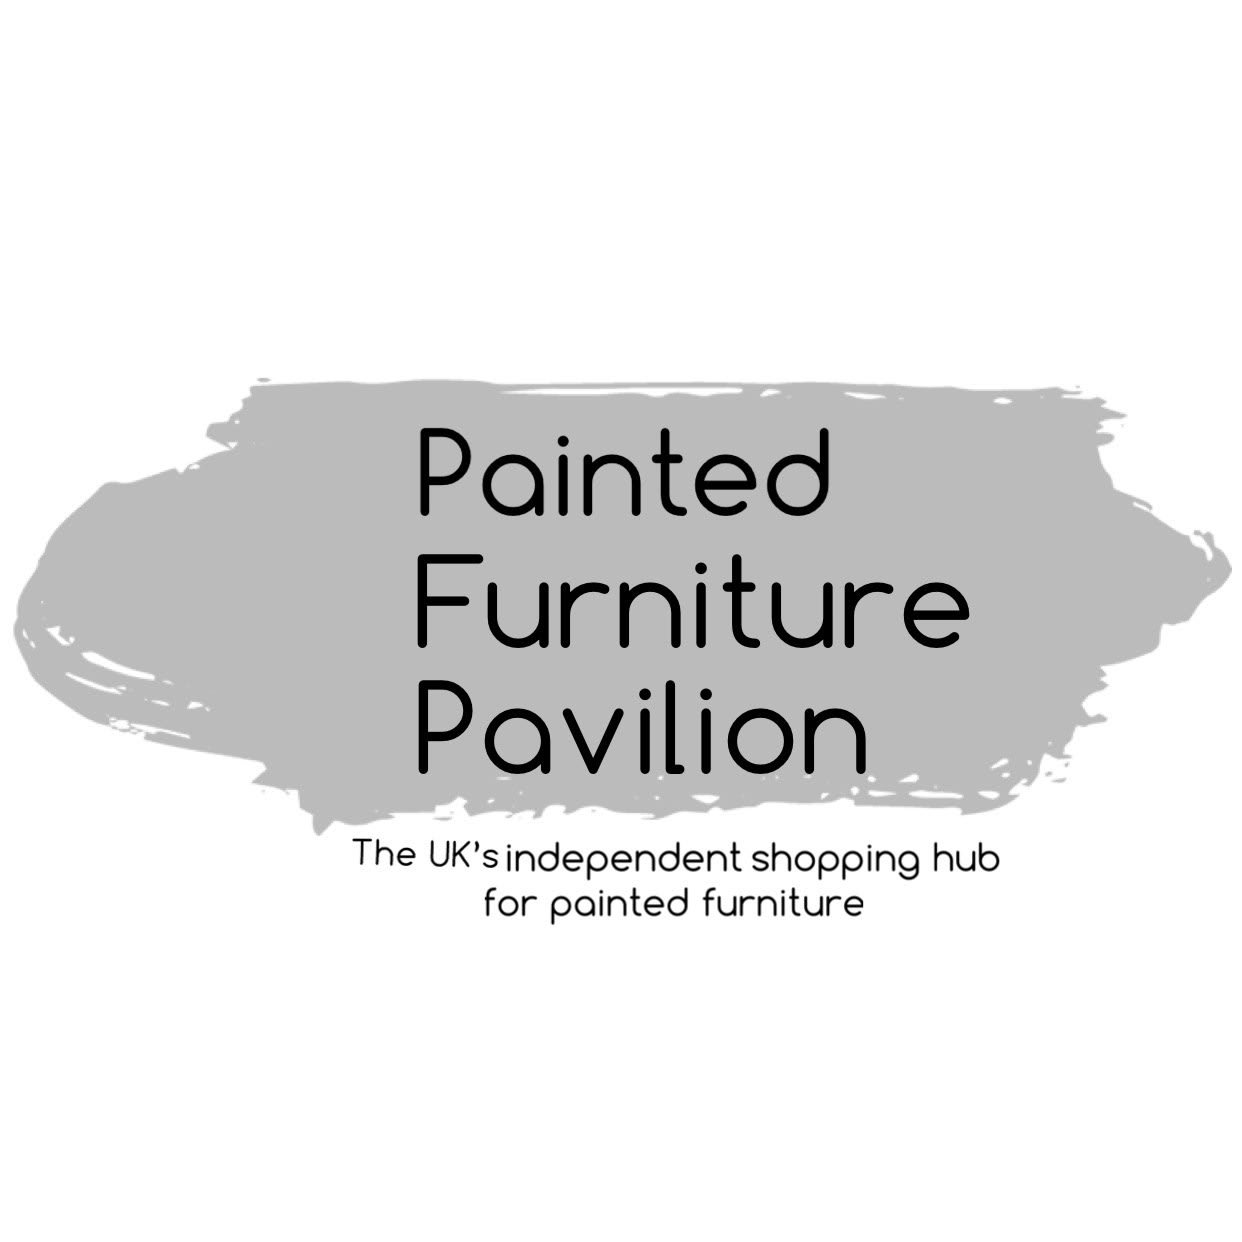 Painted Furniture Pavilion